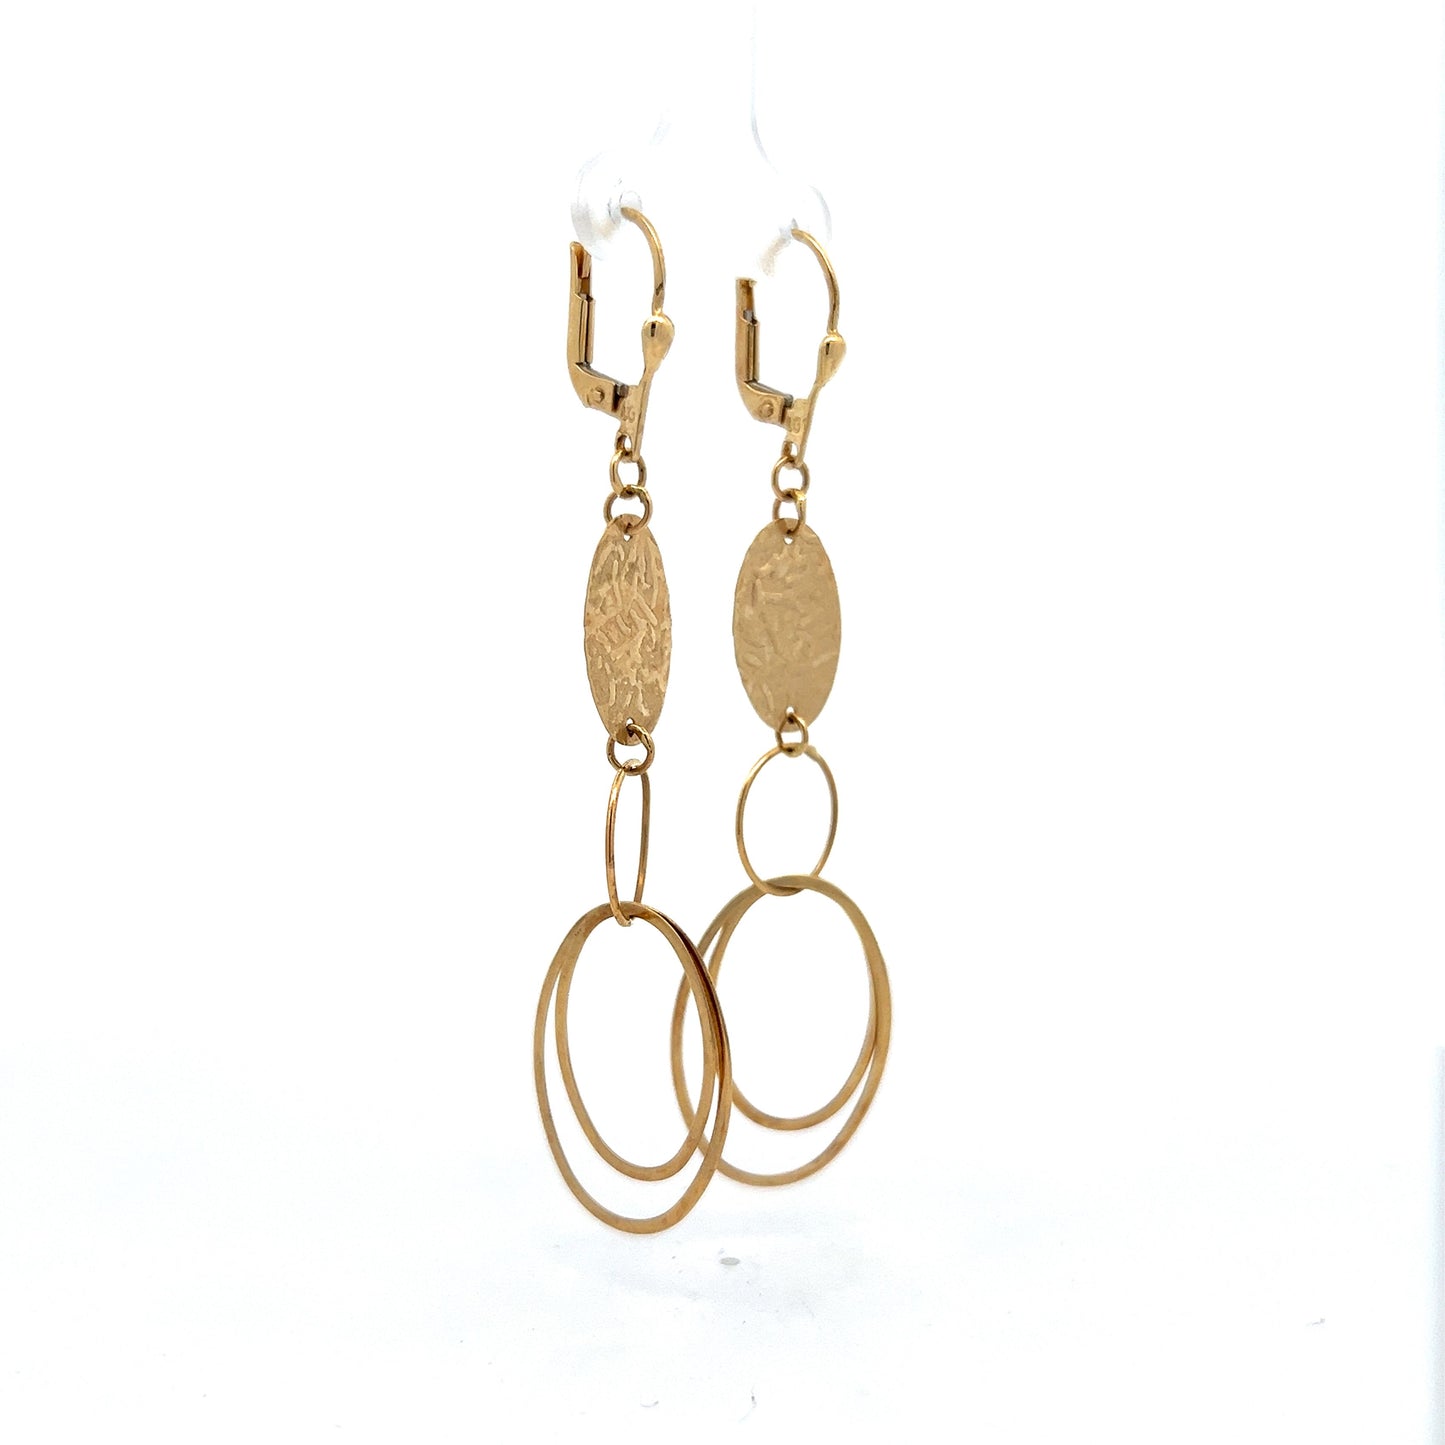 Circular Dangle Drop Earrings in 14k Yellow Gold